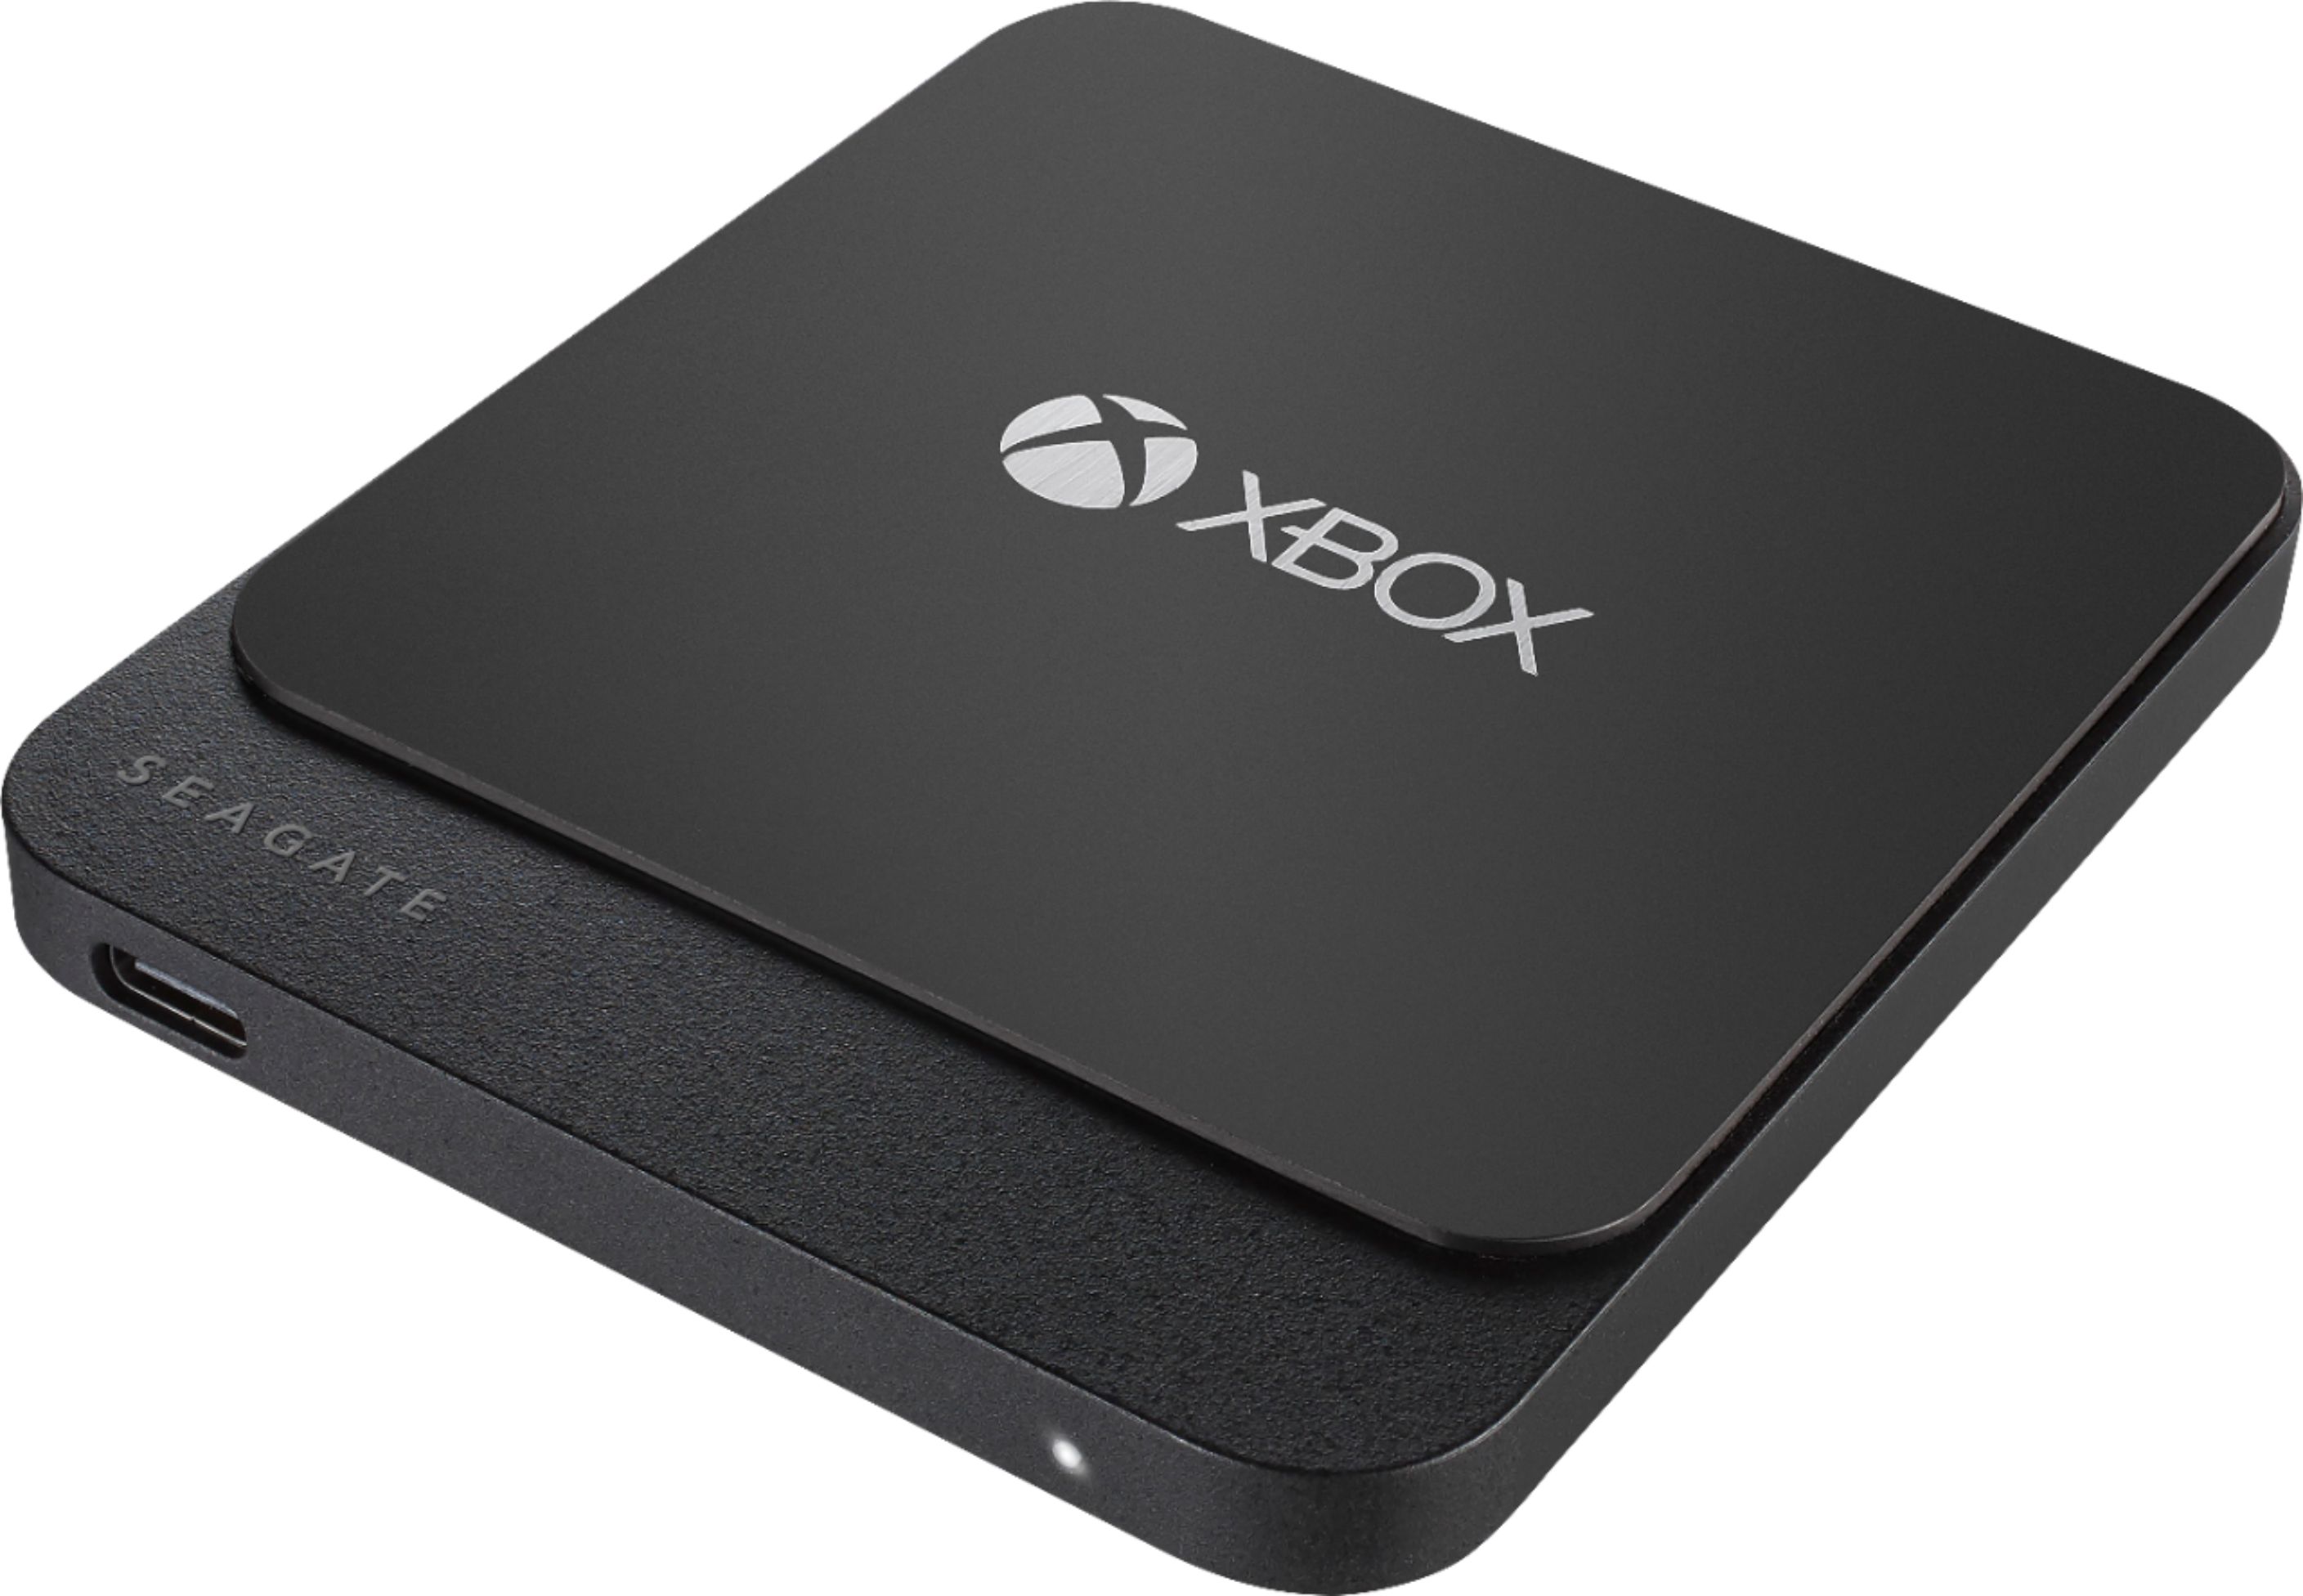 xbox one s external hard drive 1tb